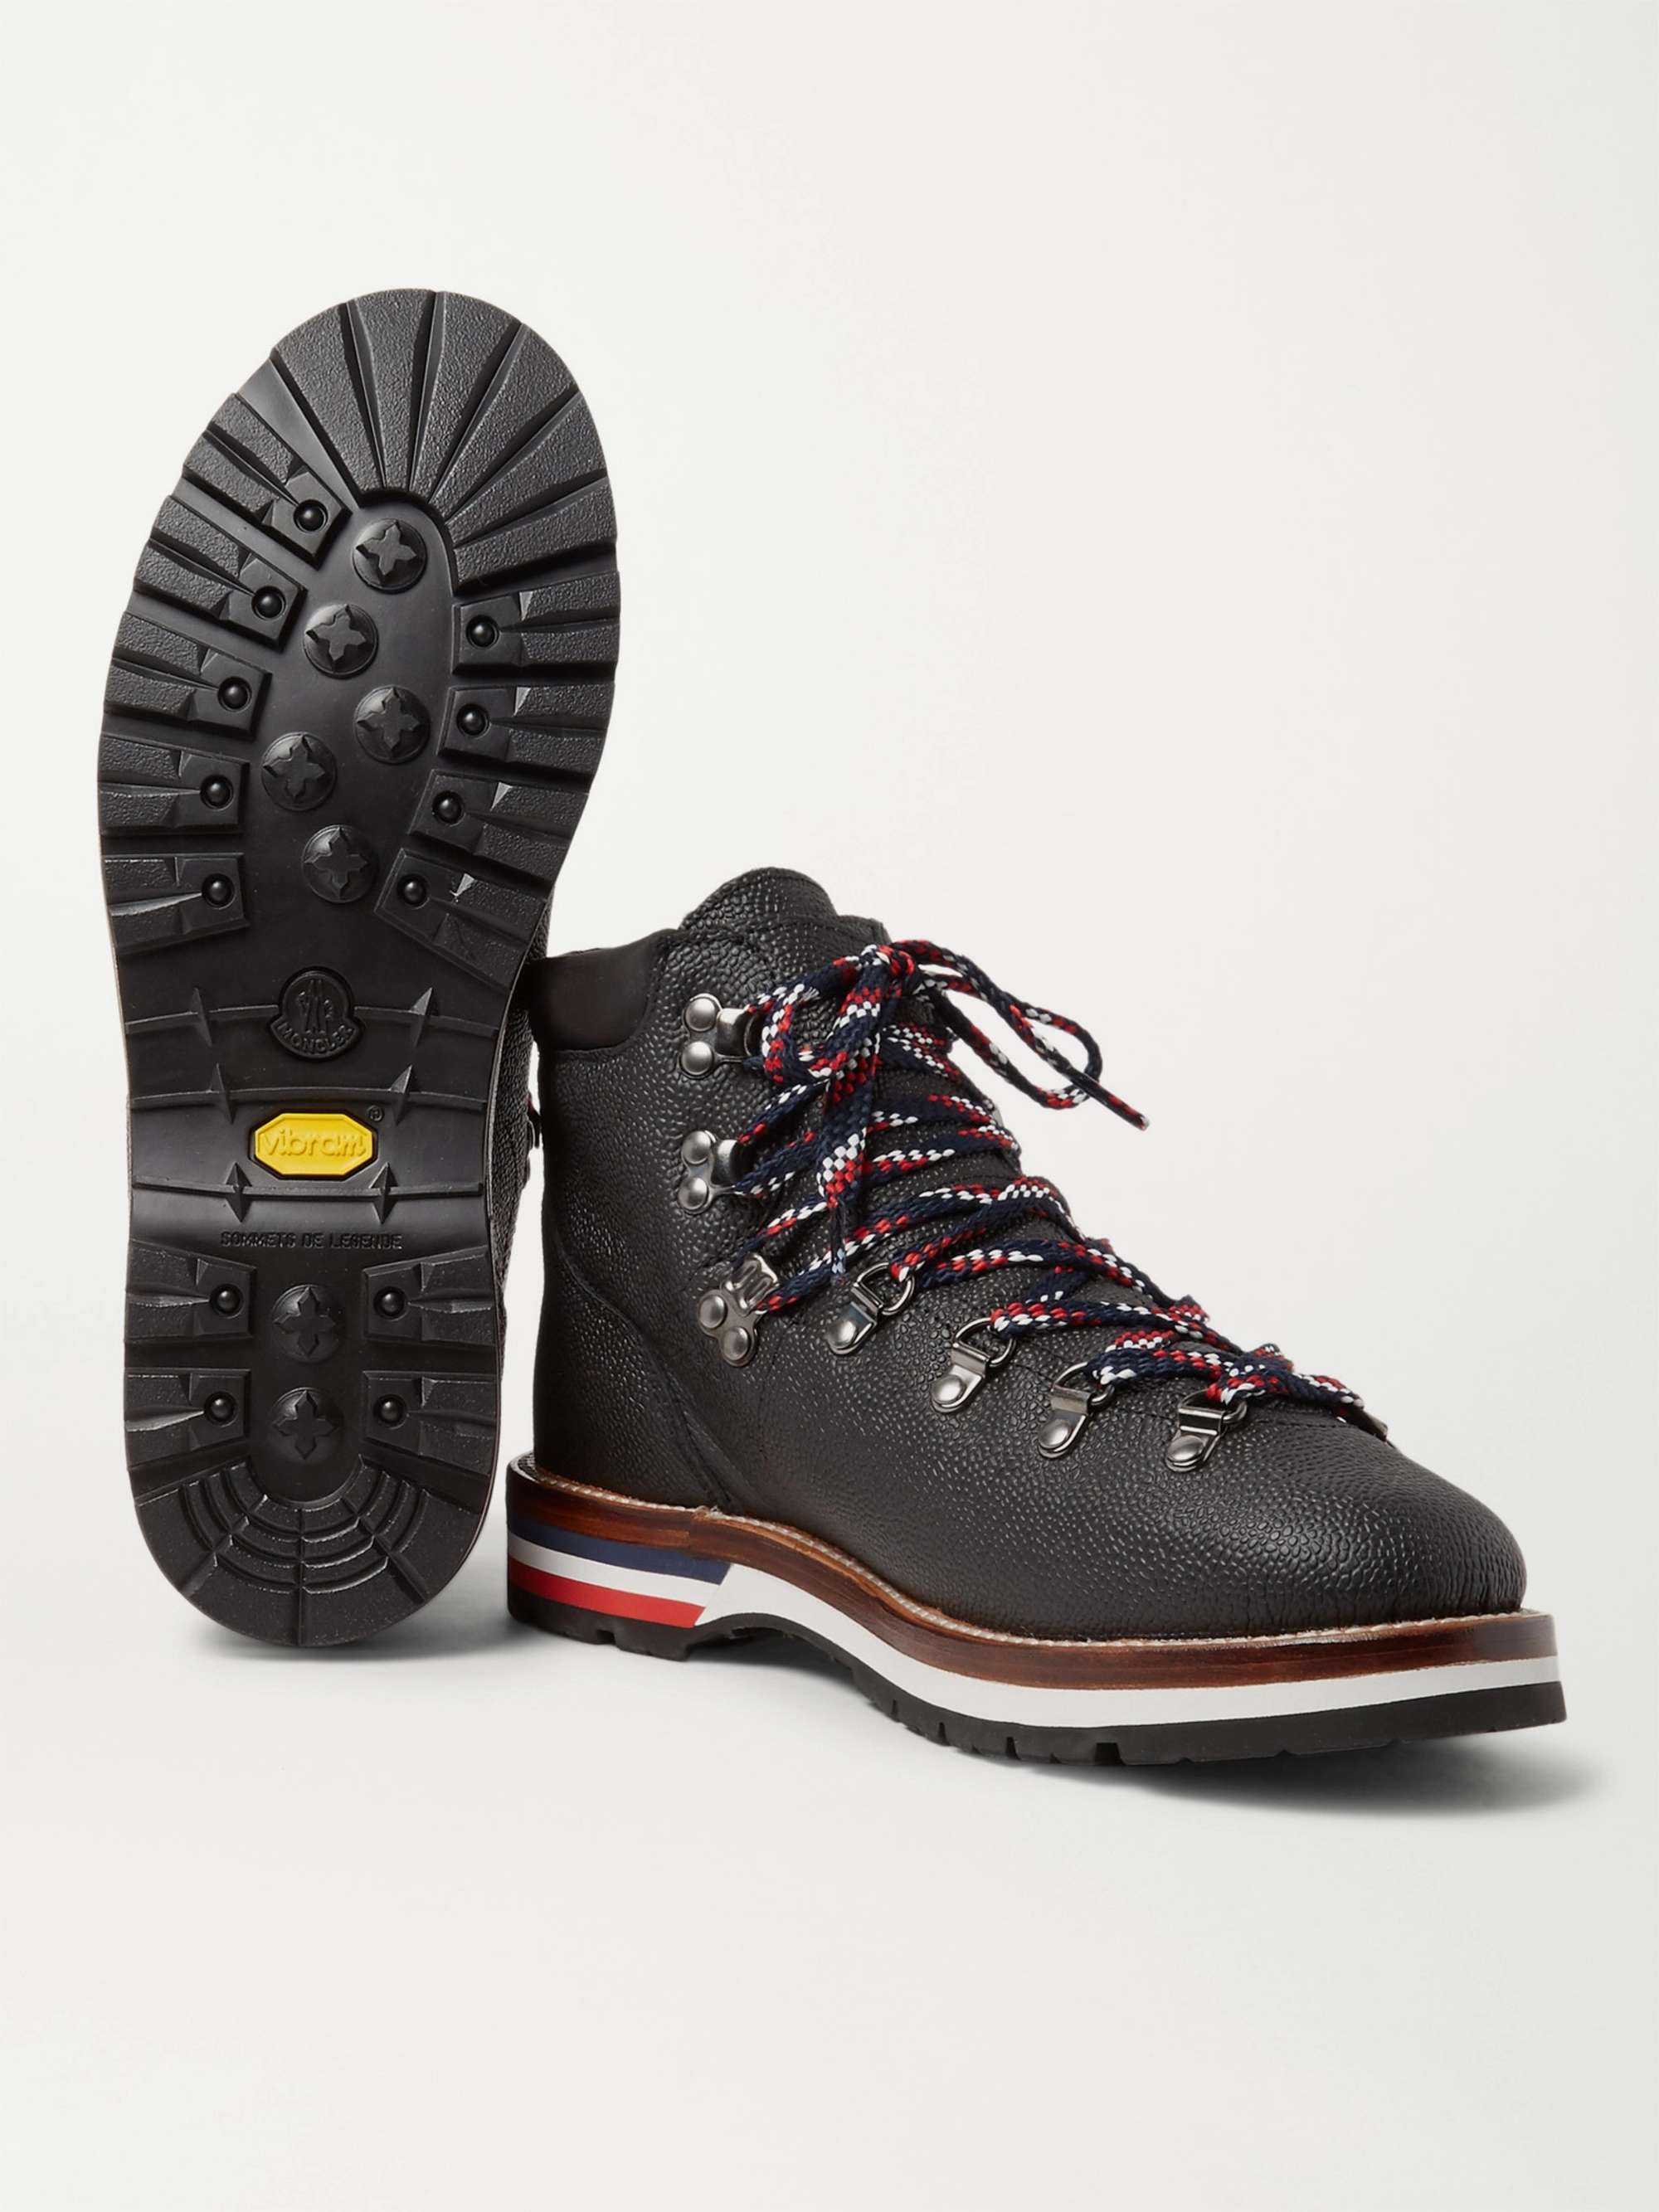 MONCLER Peak Pebble-Grain Leather Hiking Boots